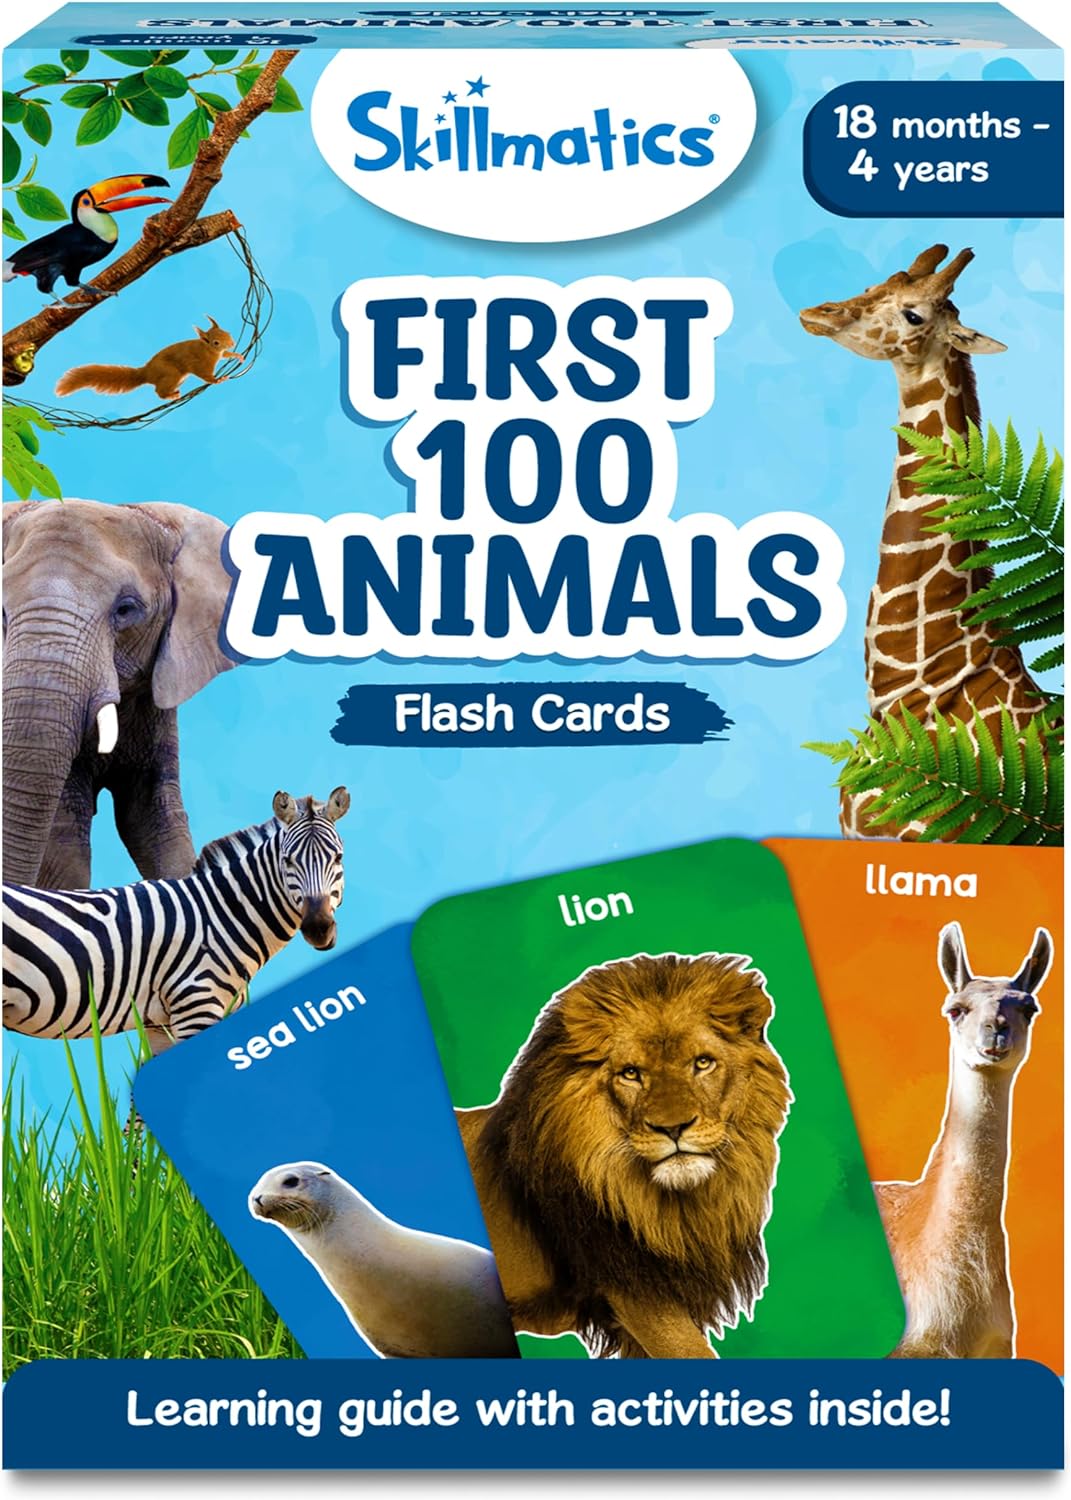 Skillmatics Flash Cards First 100 Animals